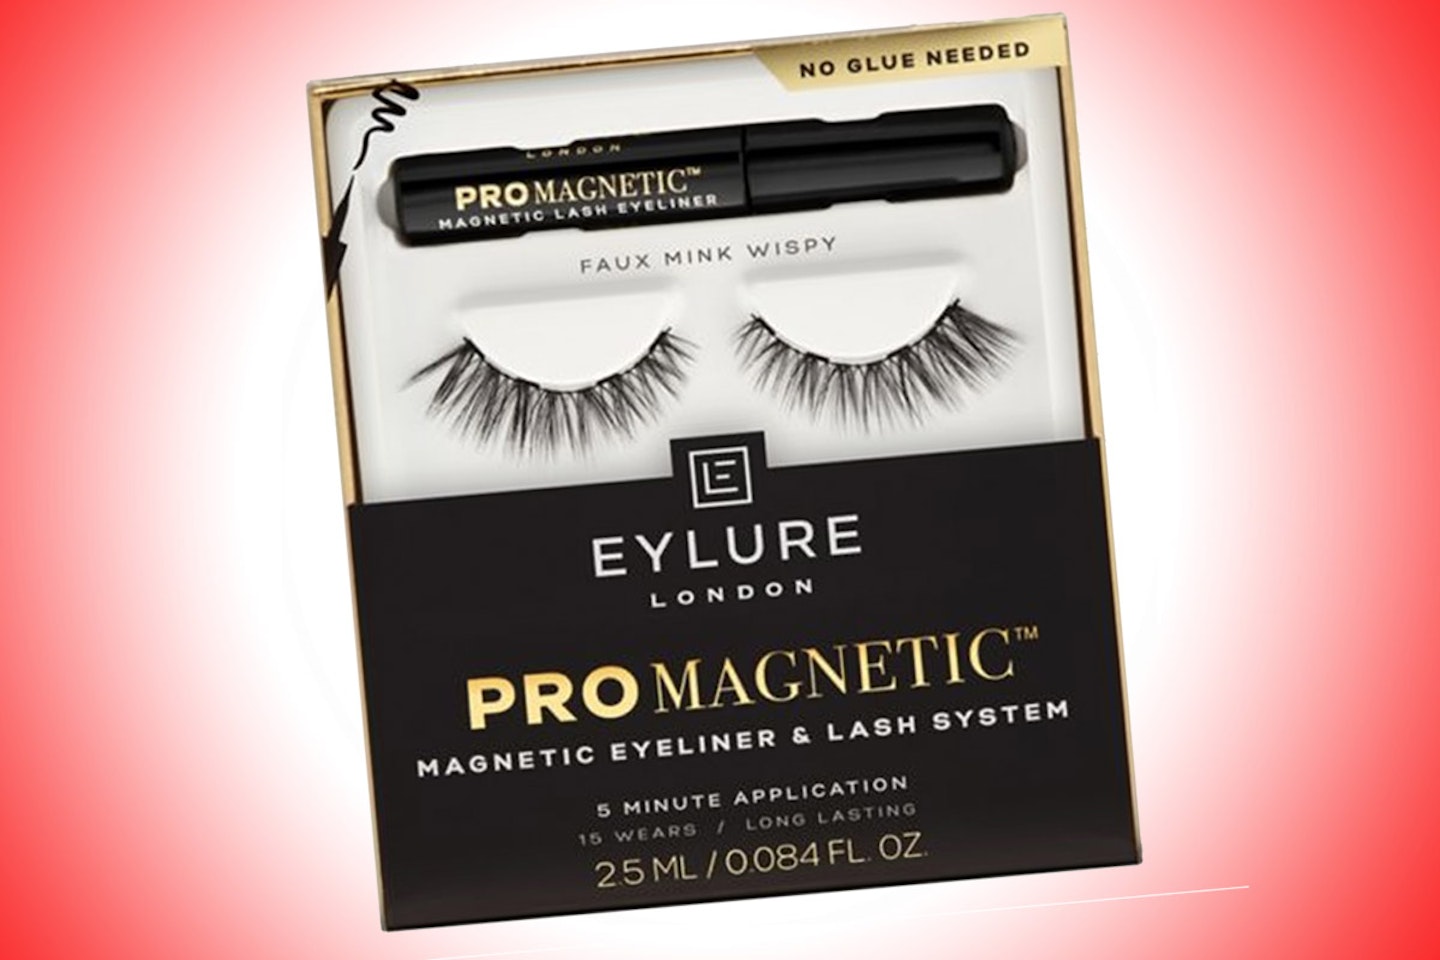 Eylure Pro Magnetic Eyeliner & Lash System - Faux Mink Wispy